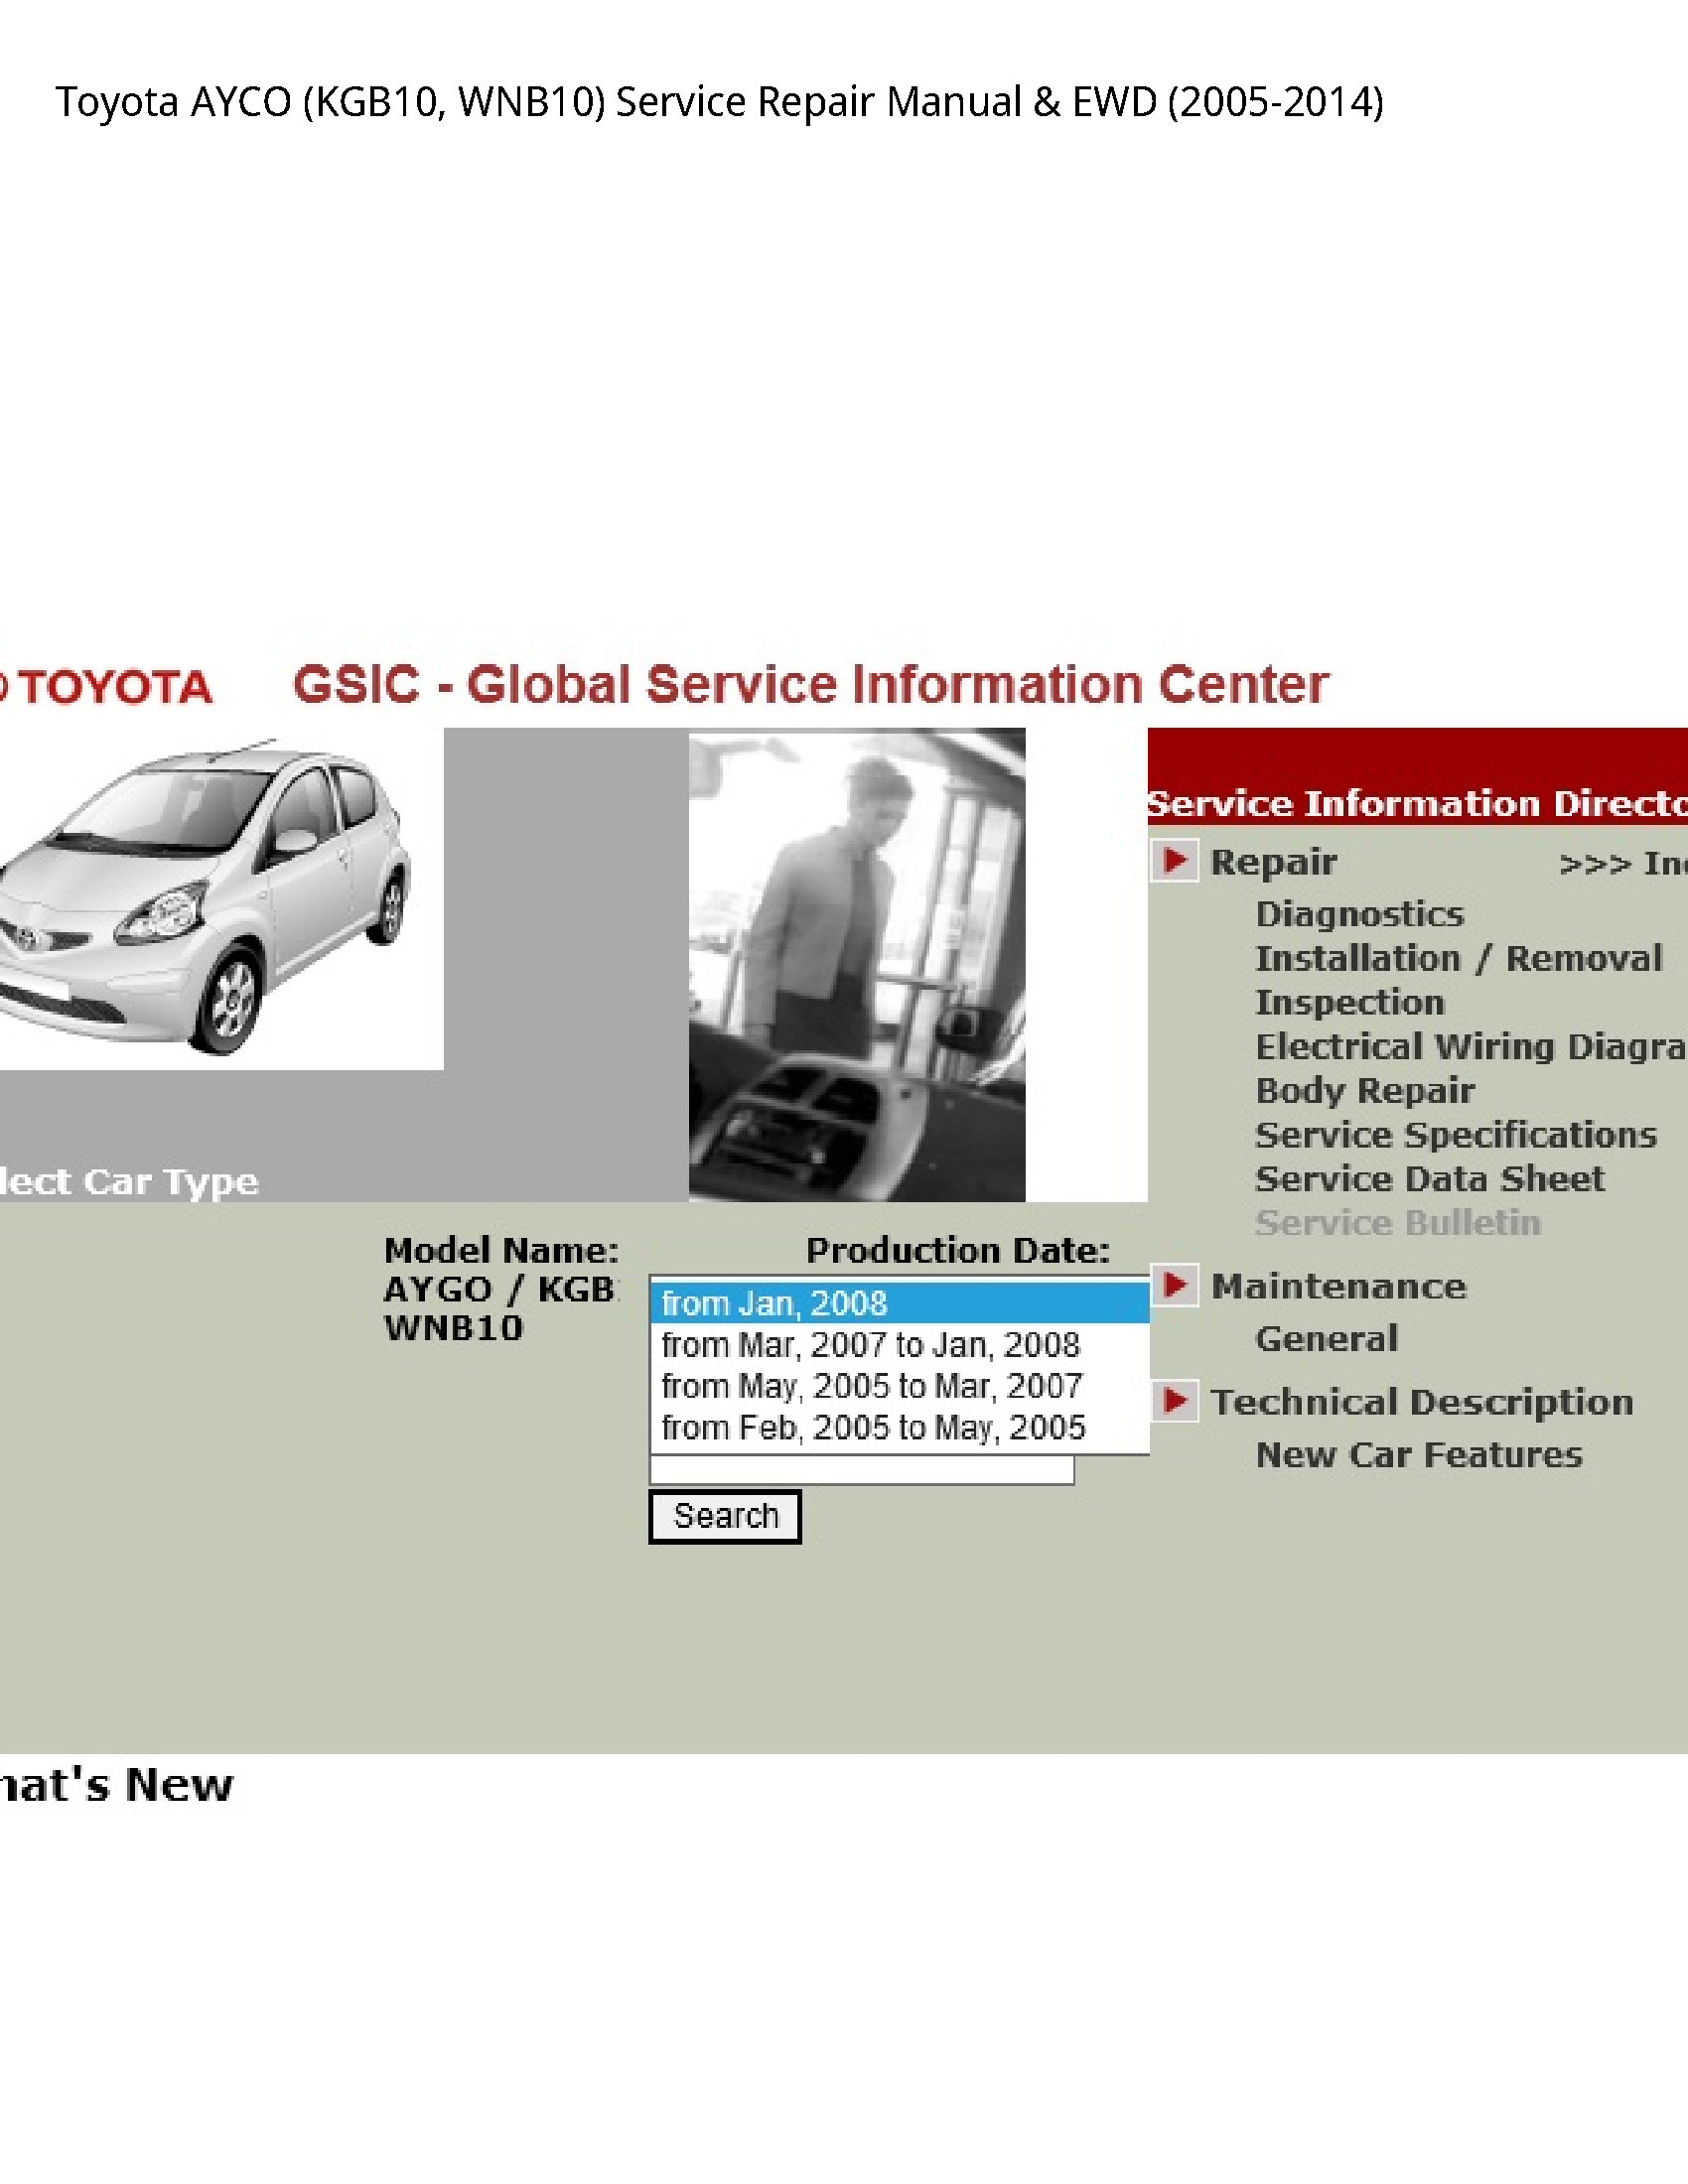 Toyota (KGB10 AYCO manual